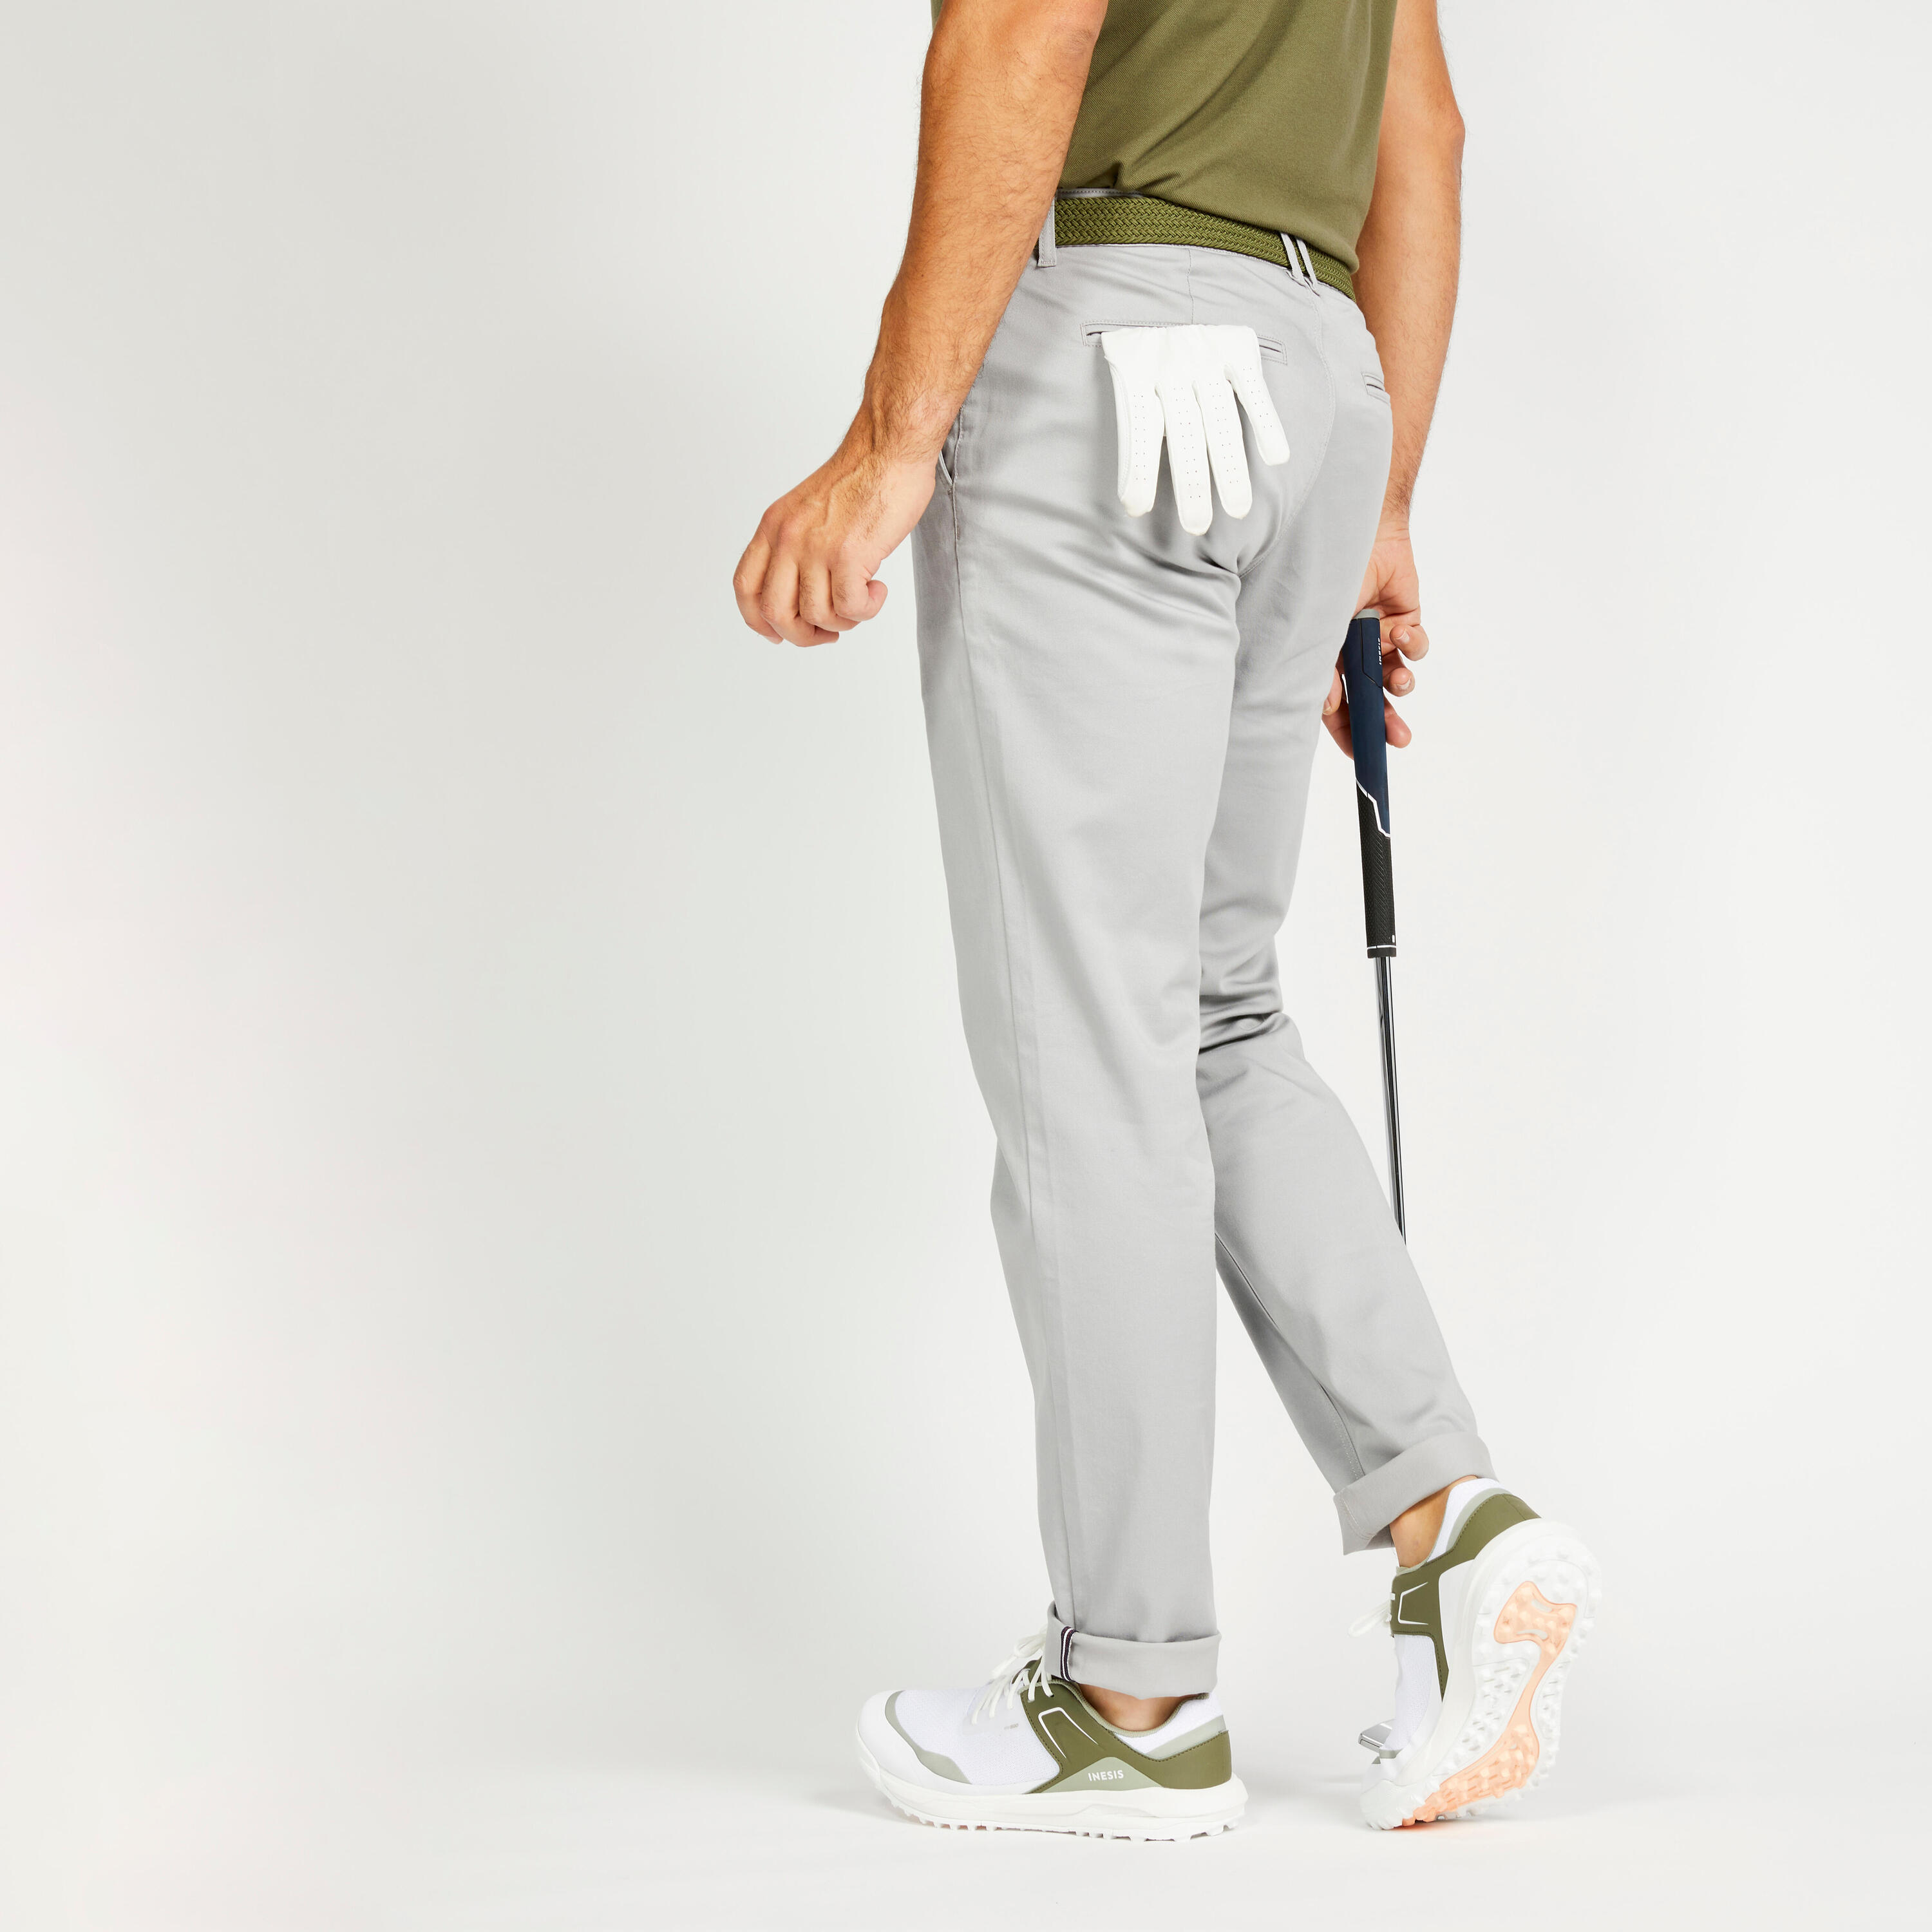 Мужские брюки чинос - MW500 серый INESIS, ледяной серый – заказать из-зарубежа в «CDEK.Shopping»